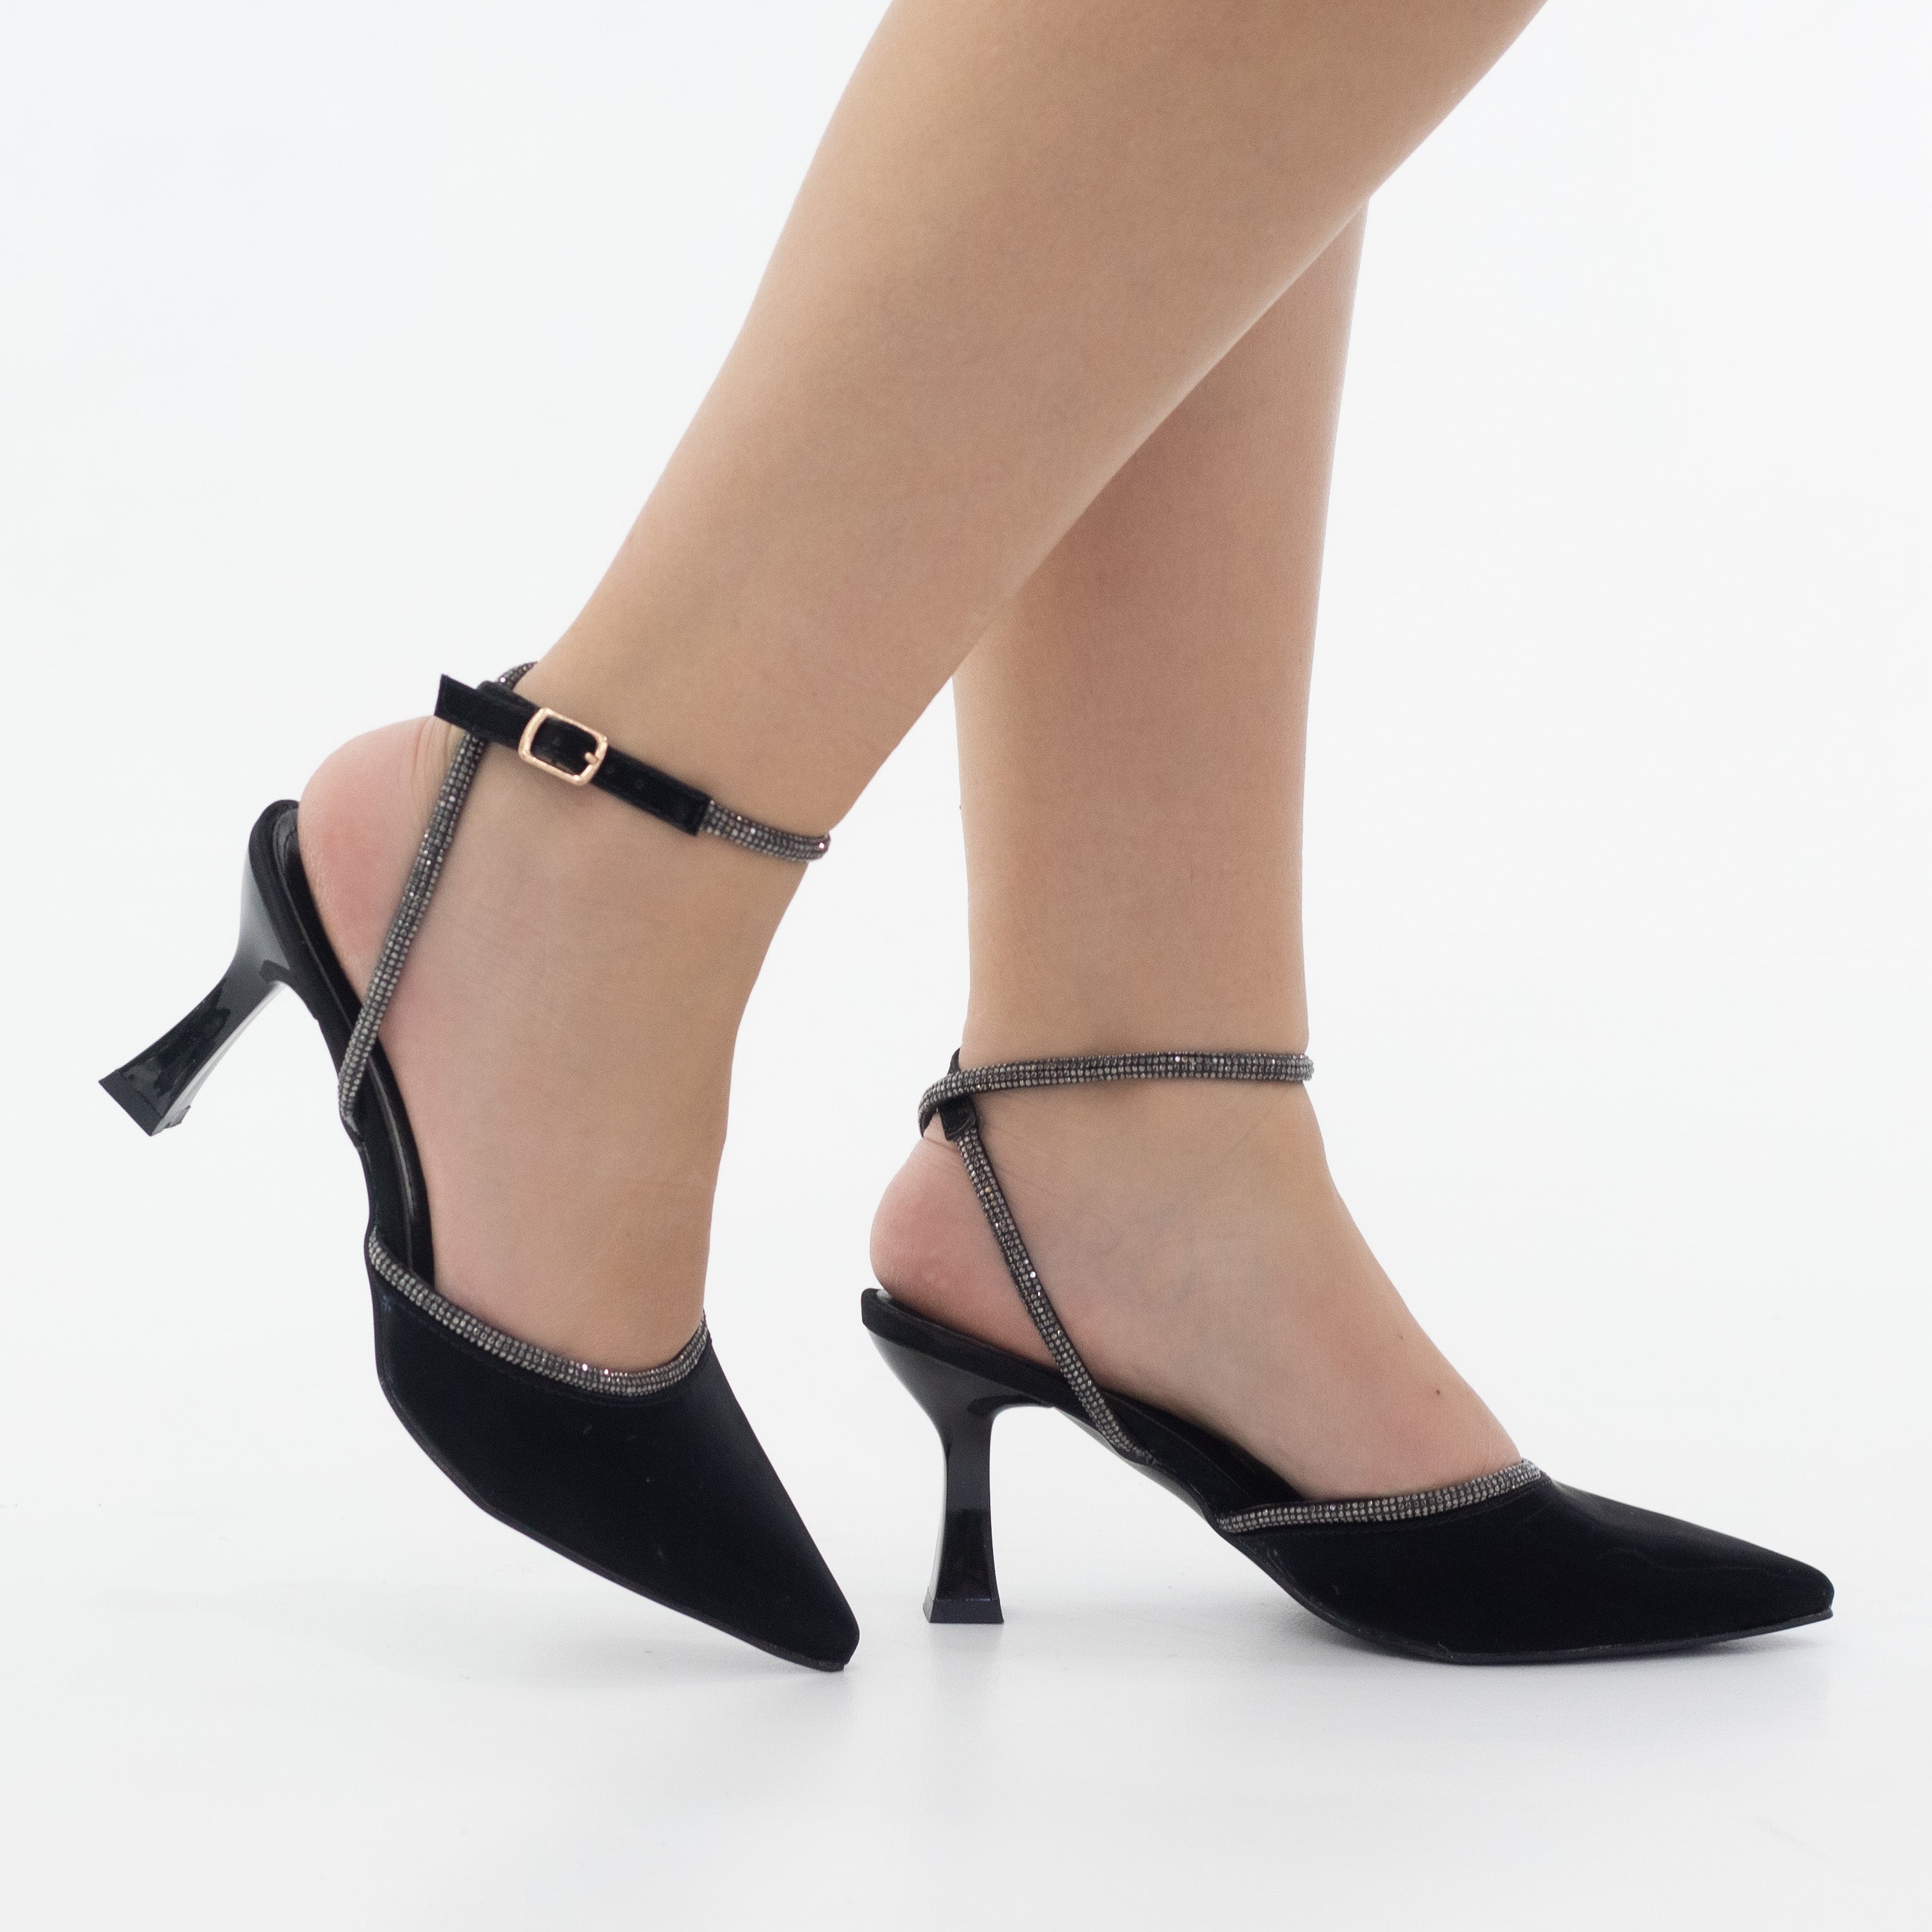 Black embellished with diamante detailed on spool heel black